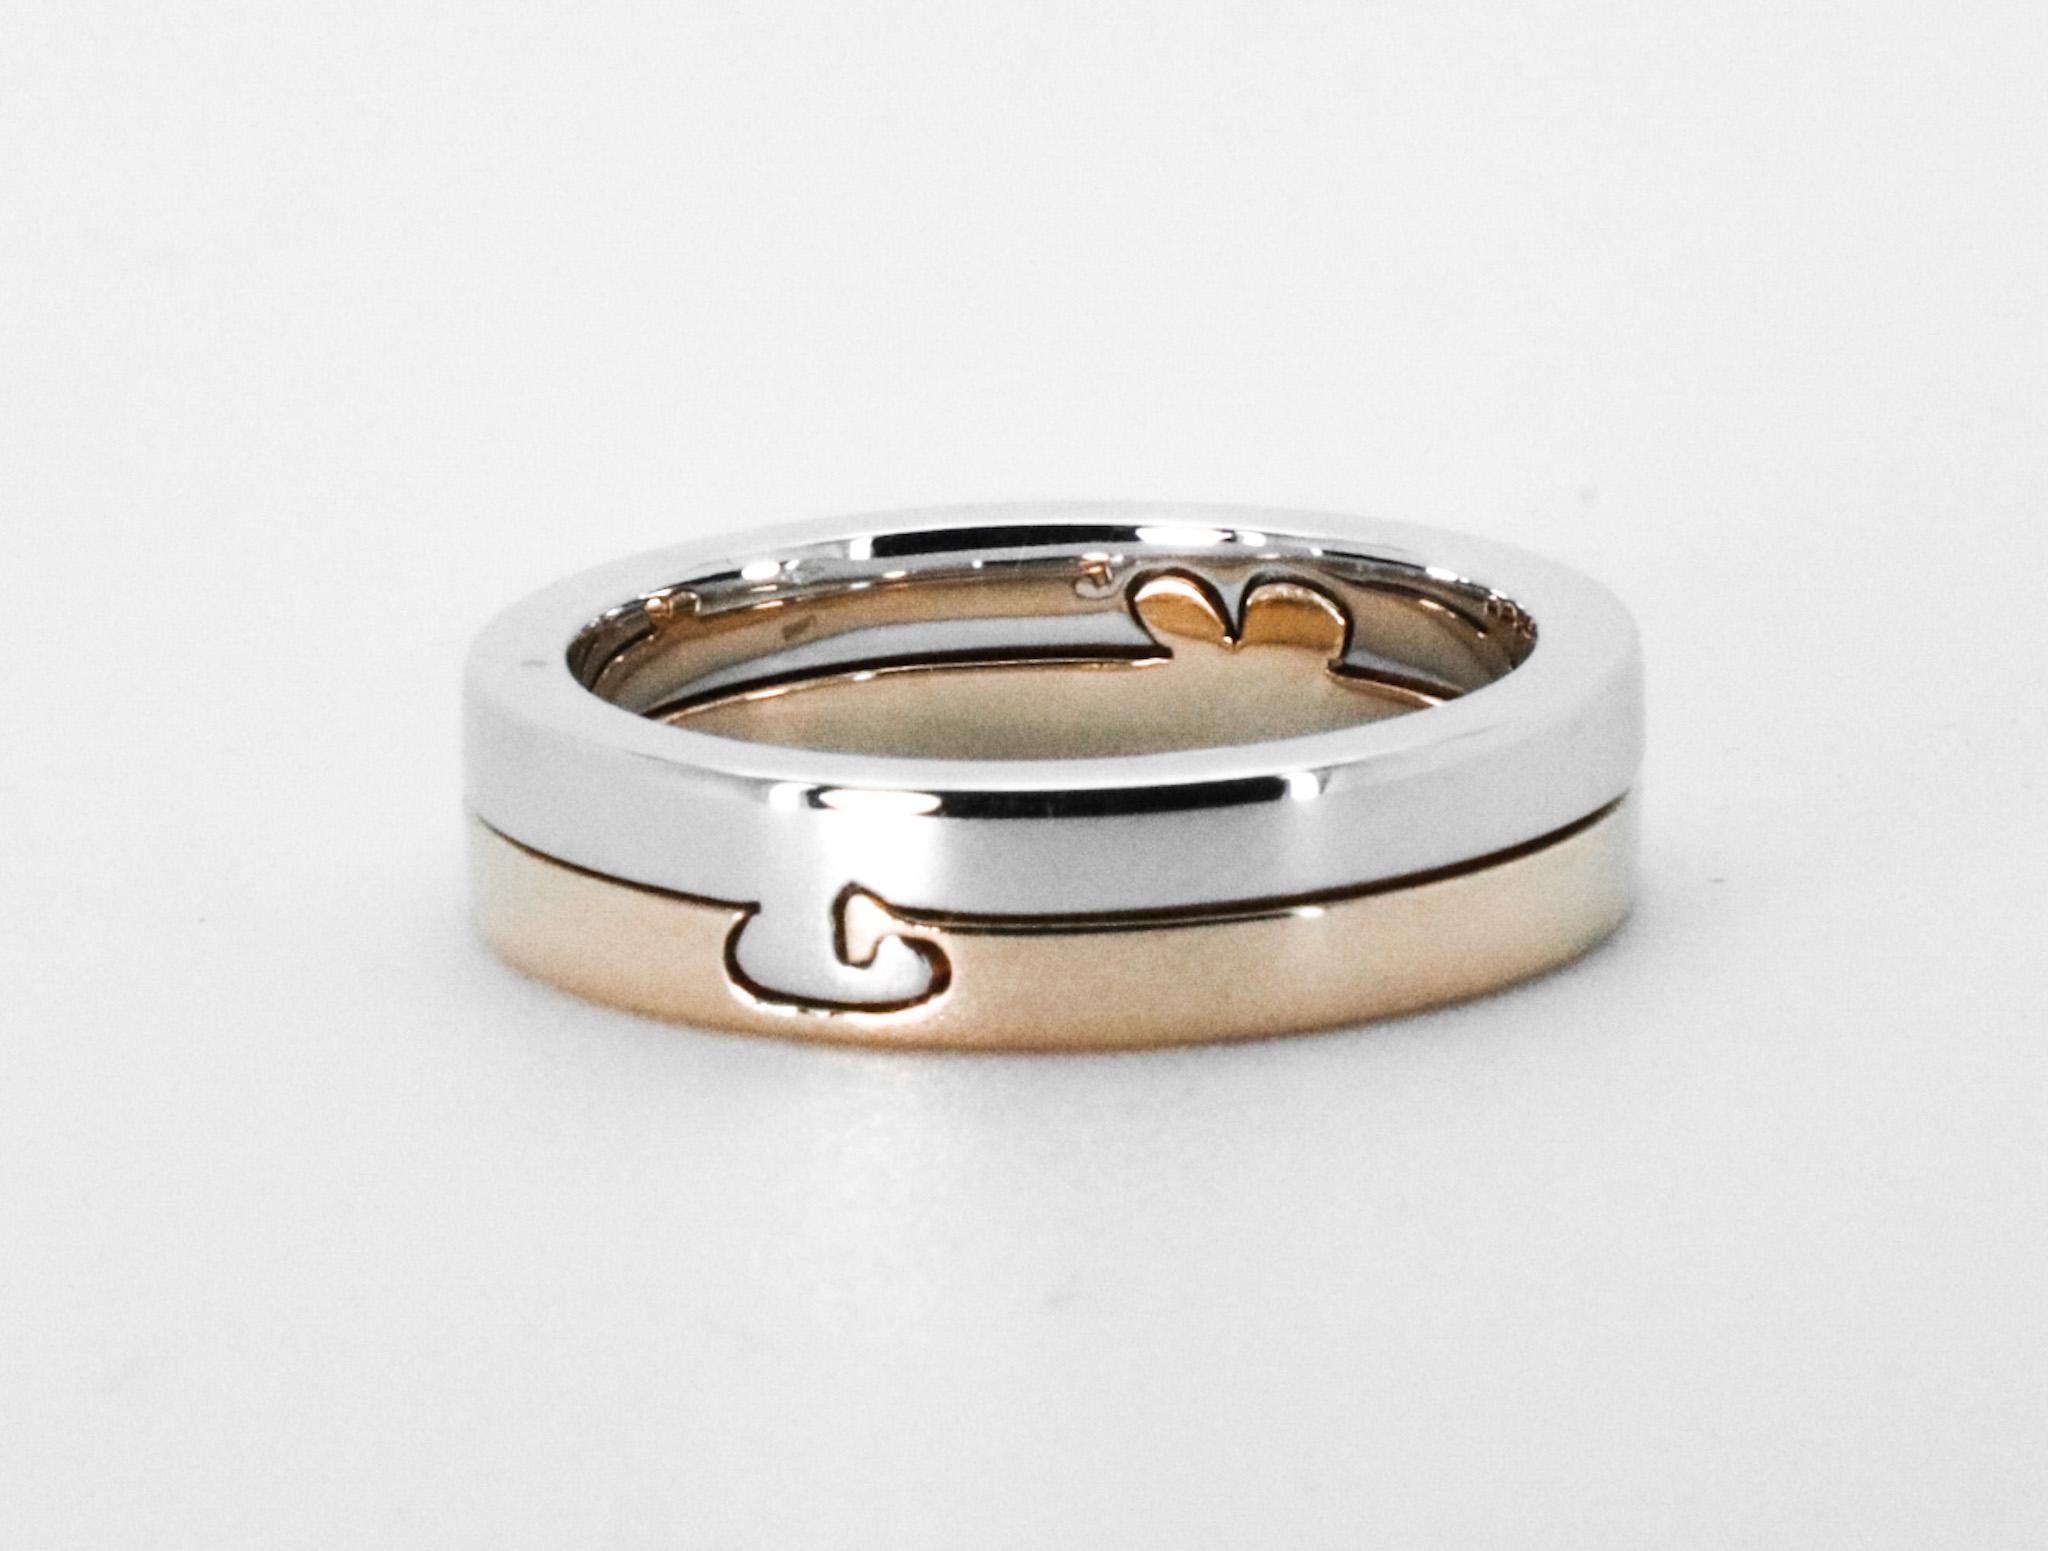 Modern Bespoke 18k Gold Wedding Ring with Interlocking Initials Design For Sale